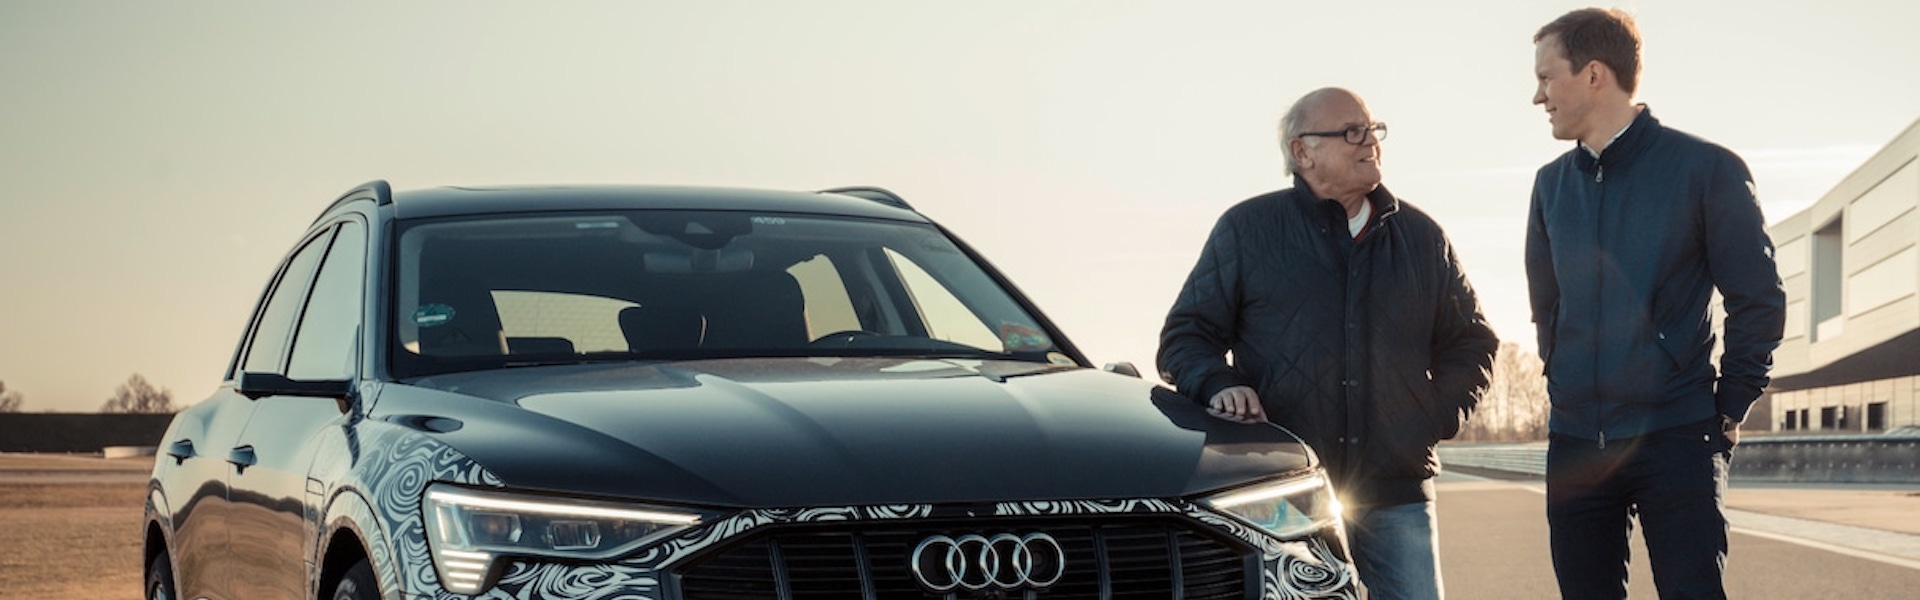 Stig Blomquist in Mattias Ekström stojita ob Audi e-tron avtomobilu.